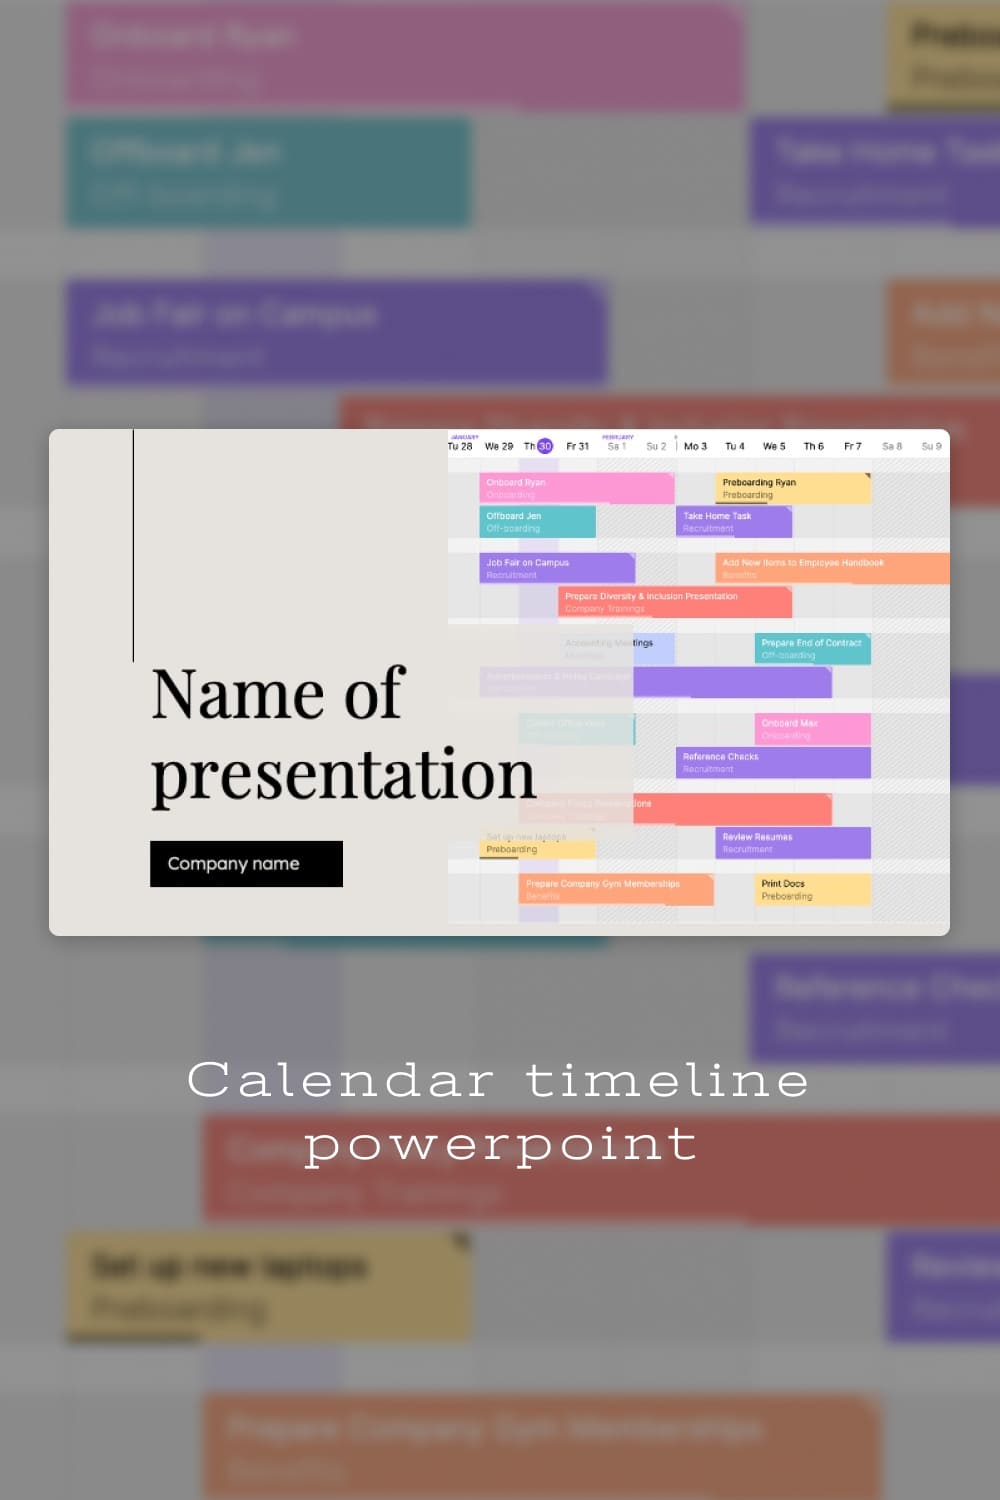 Calendar Timeline Powerpoint of Pinterest.